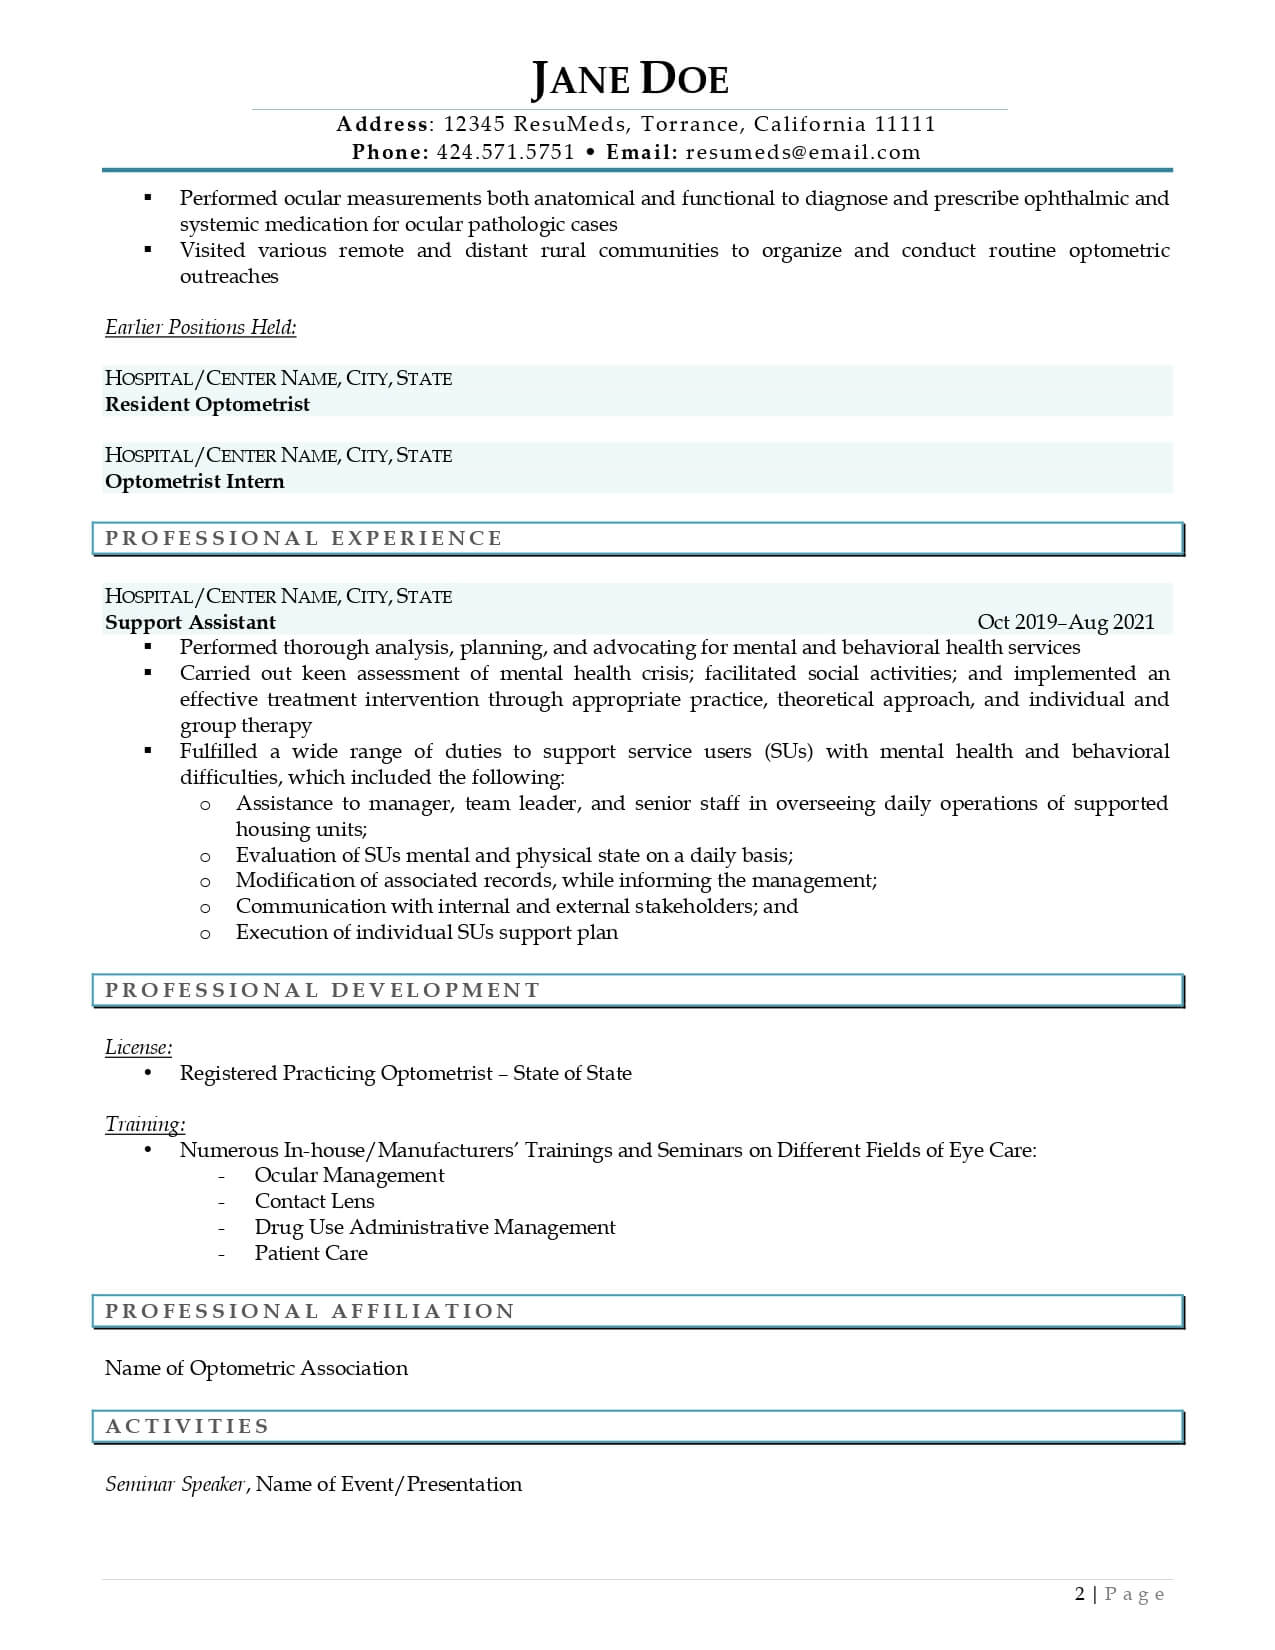 resumeds optometrist resume example page 0002